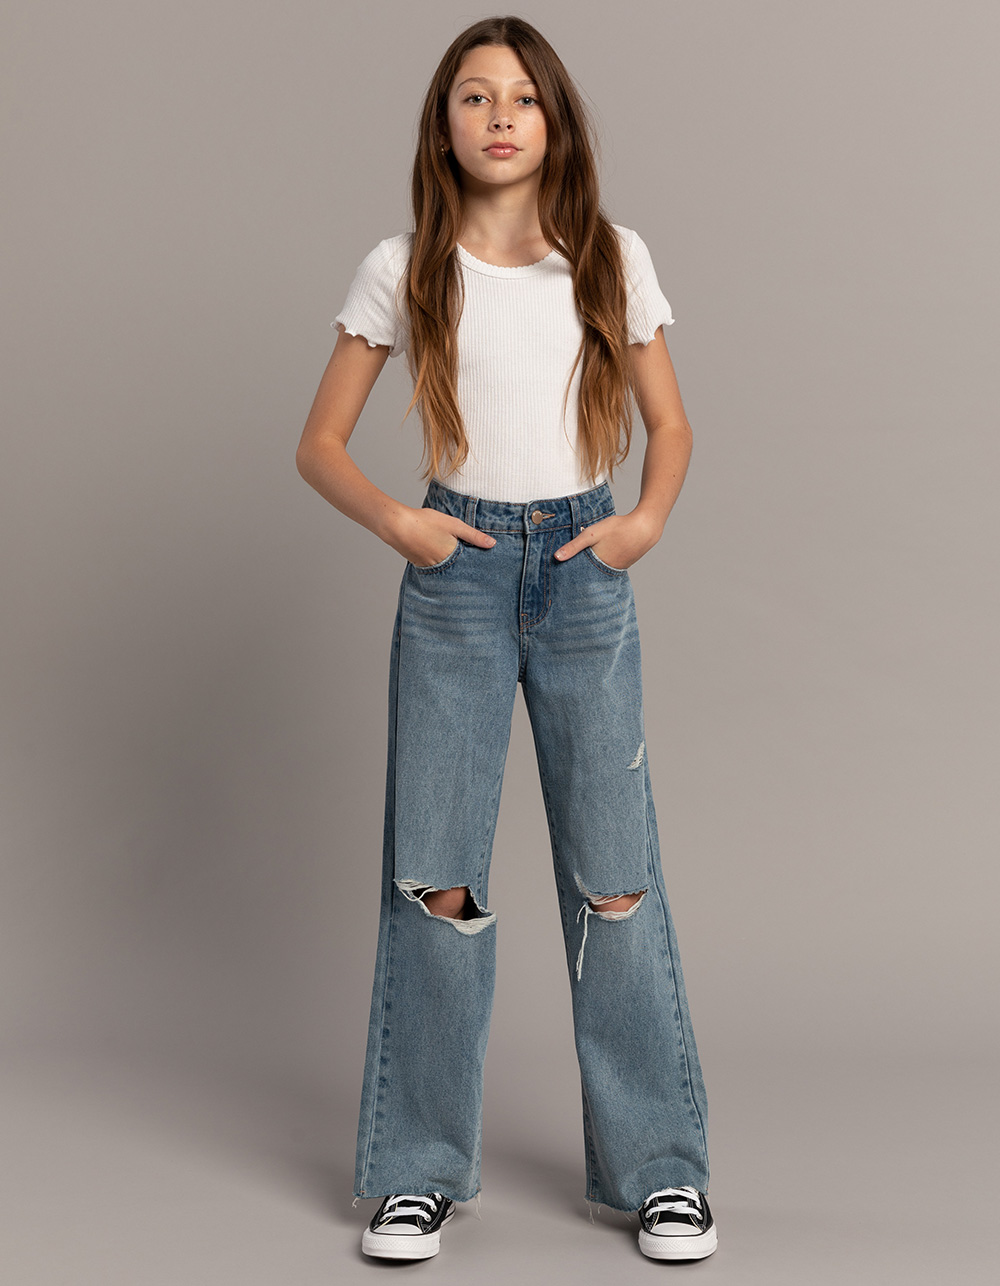 Girls Baggy Jeans Wide Leg Ripped Jeans Casual Elastic Waist Denim Pants  for Kids Teens